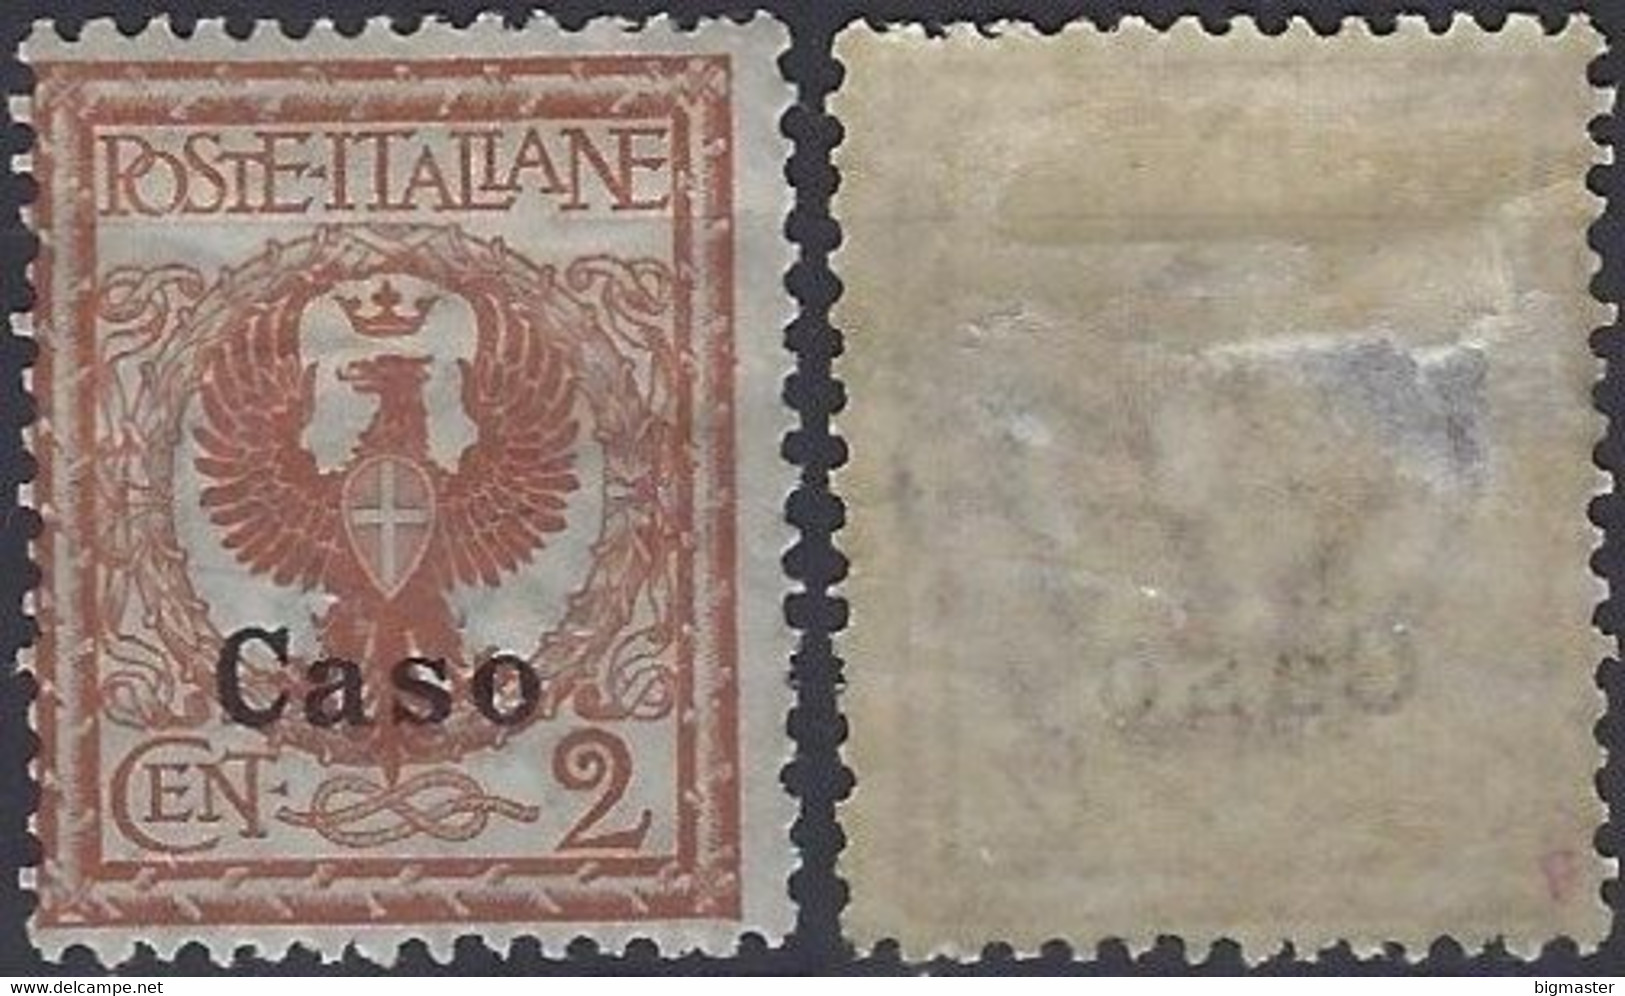 1912 Regno D'Italia IG 1912 IT-EG CS1 2c Italy Stamps Overprinted 'Caso' - Ägäis (Caso)